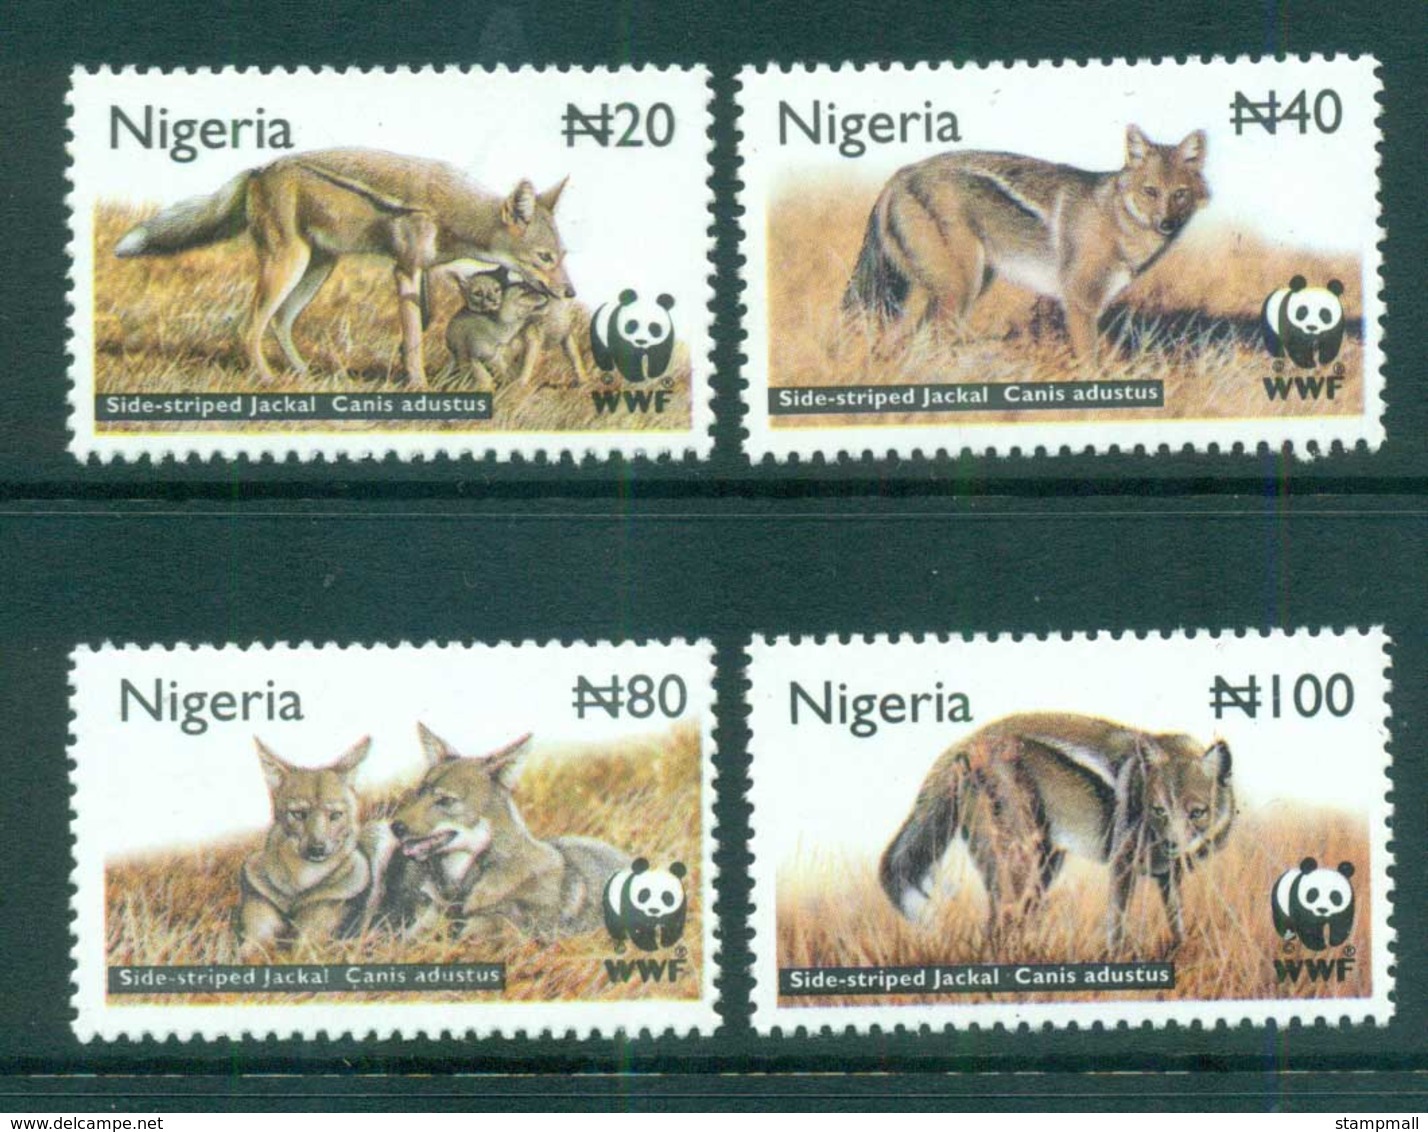 Nigeria 2003 WWF Side-striped Jackal MUH Lot73232 - Nigeria (1961-...)